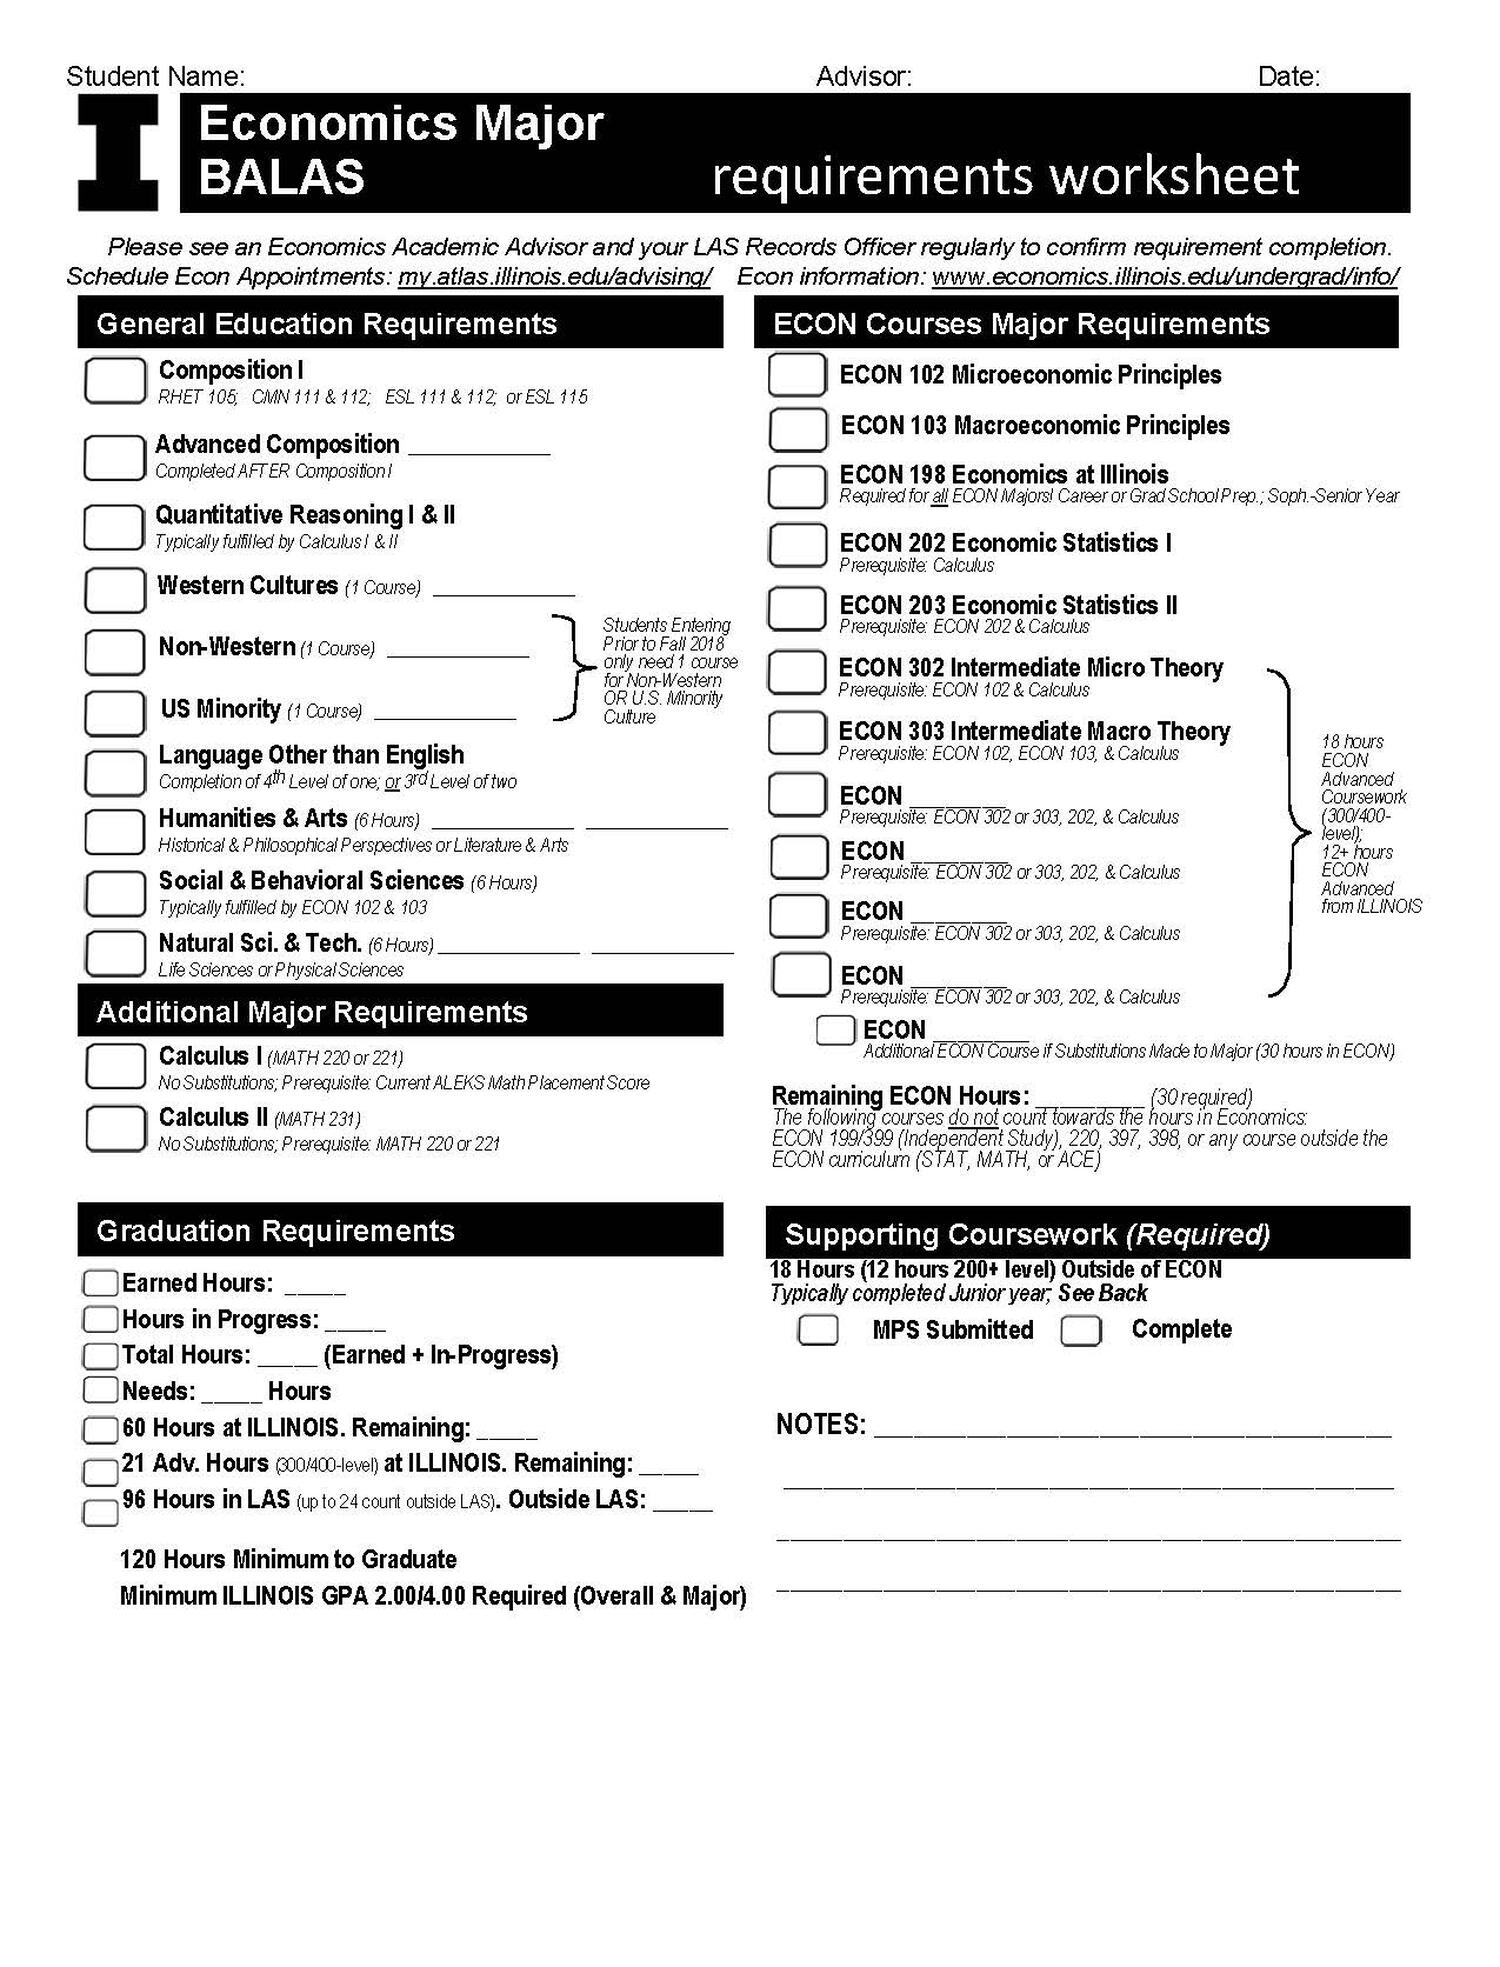 BA Requirement Worksheet Image